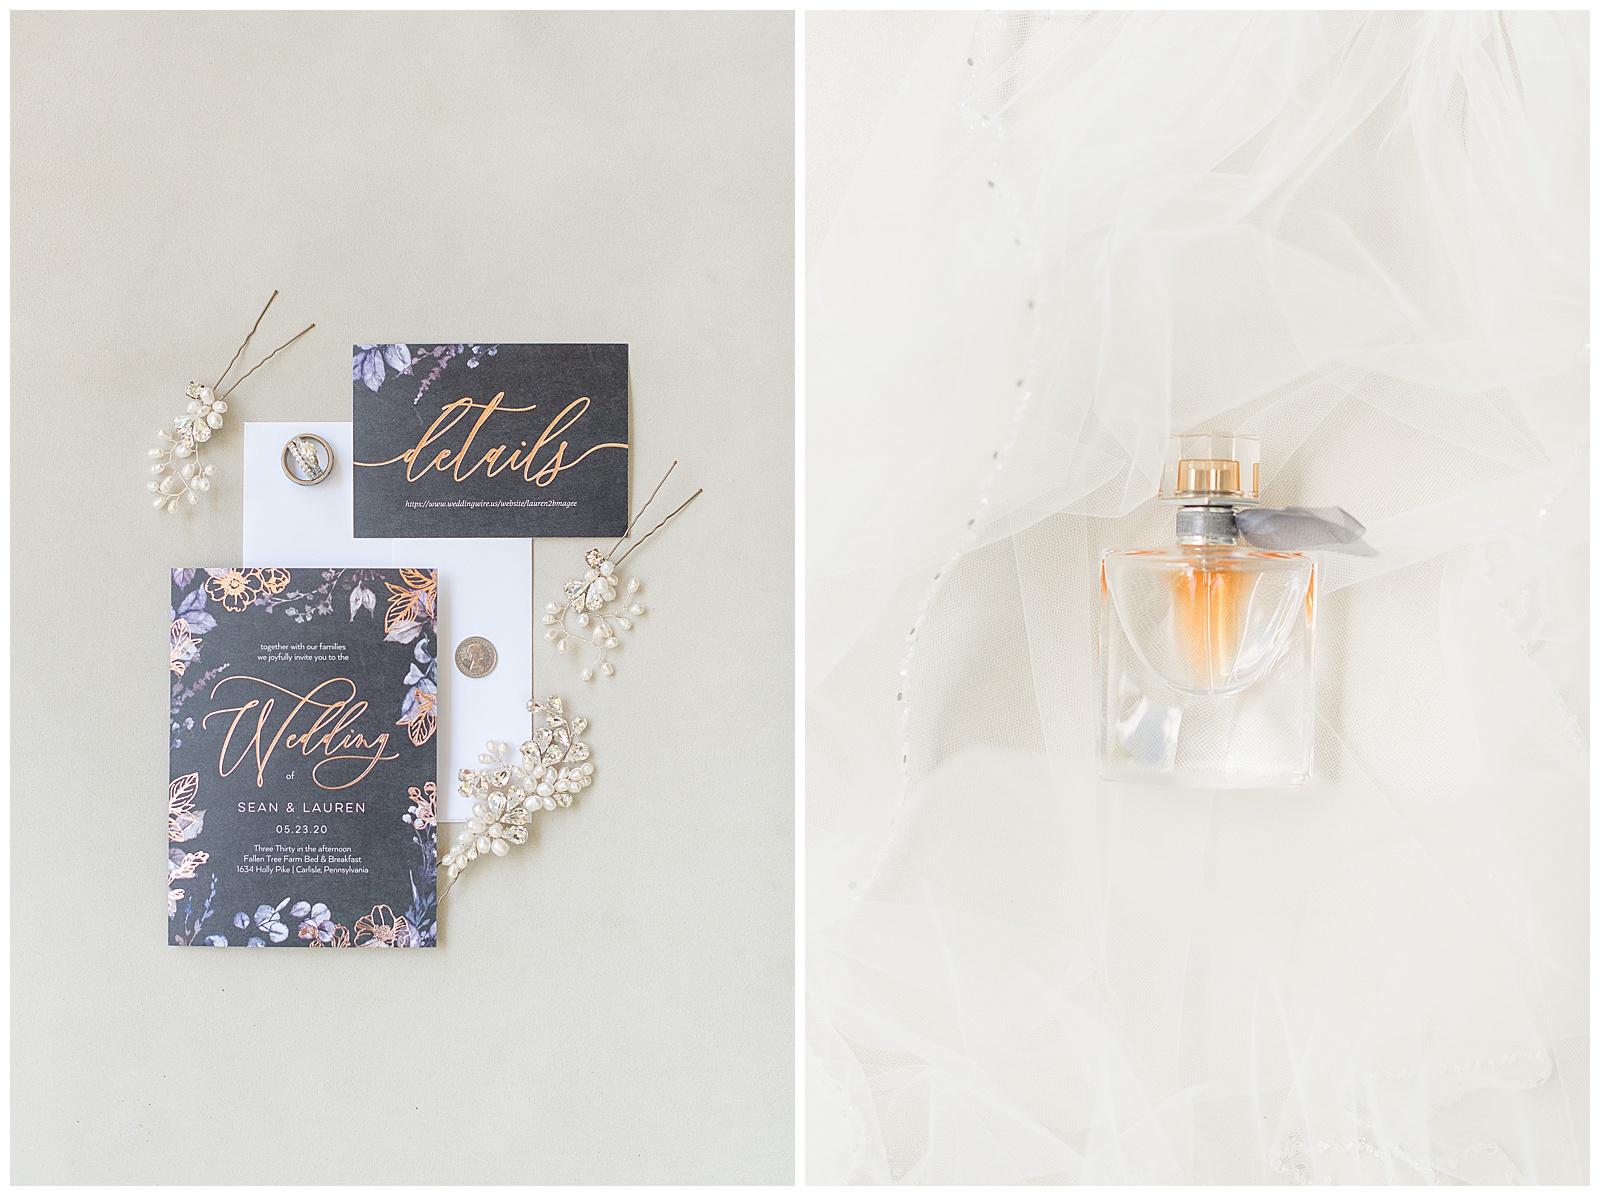 wedding invitation and perfume, wedding details